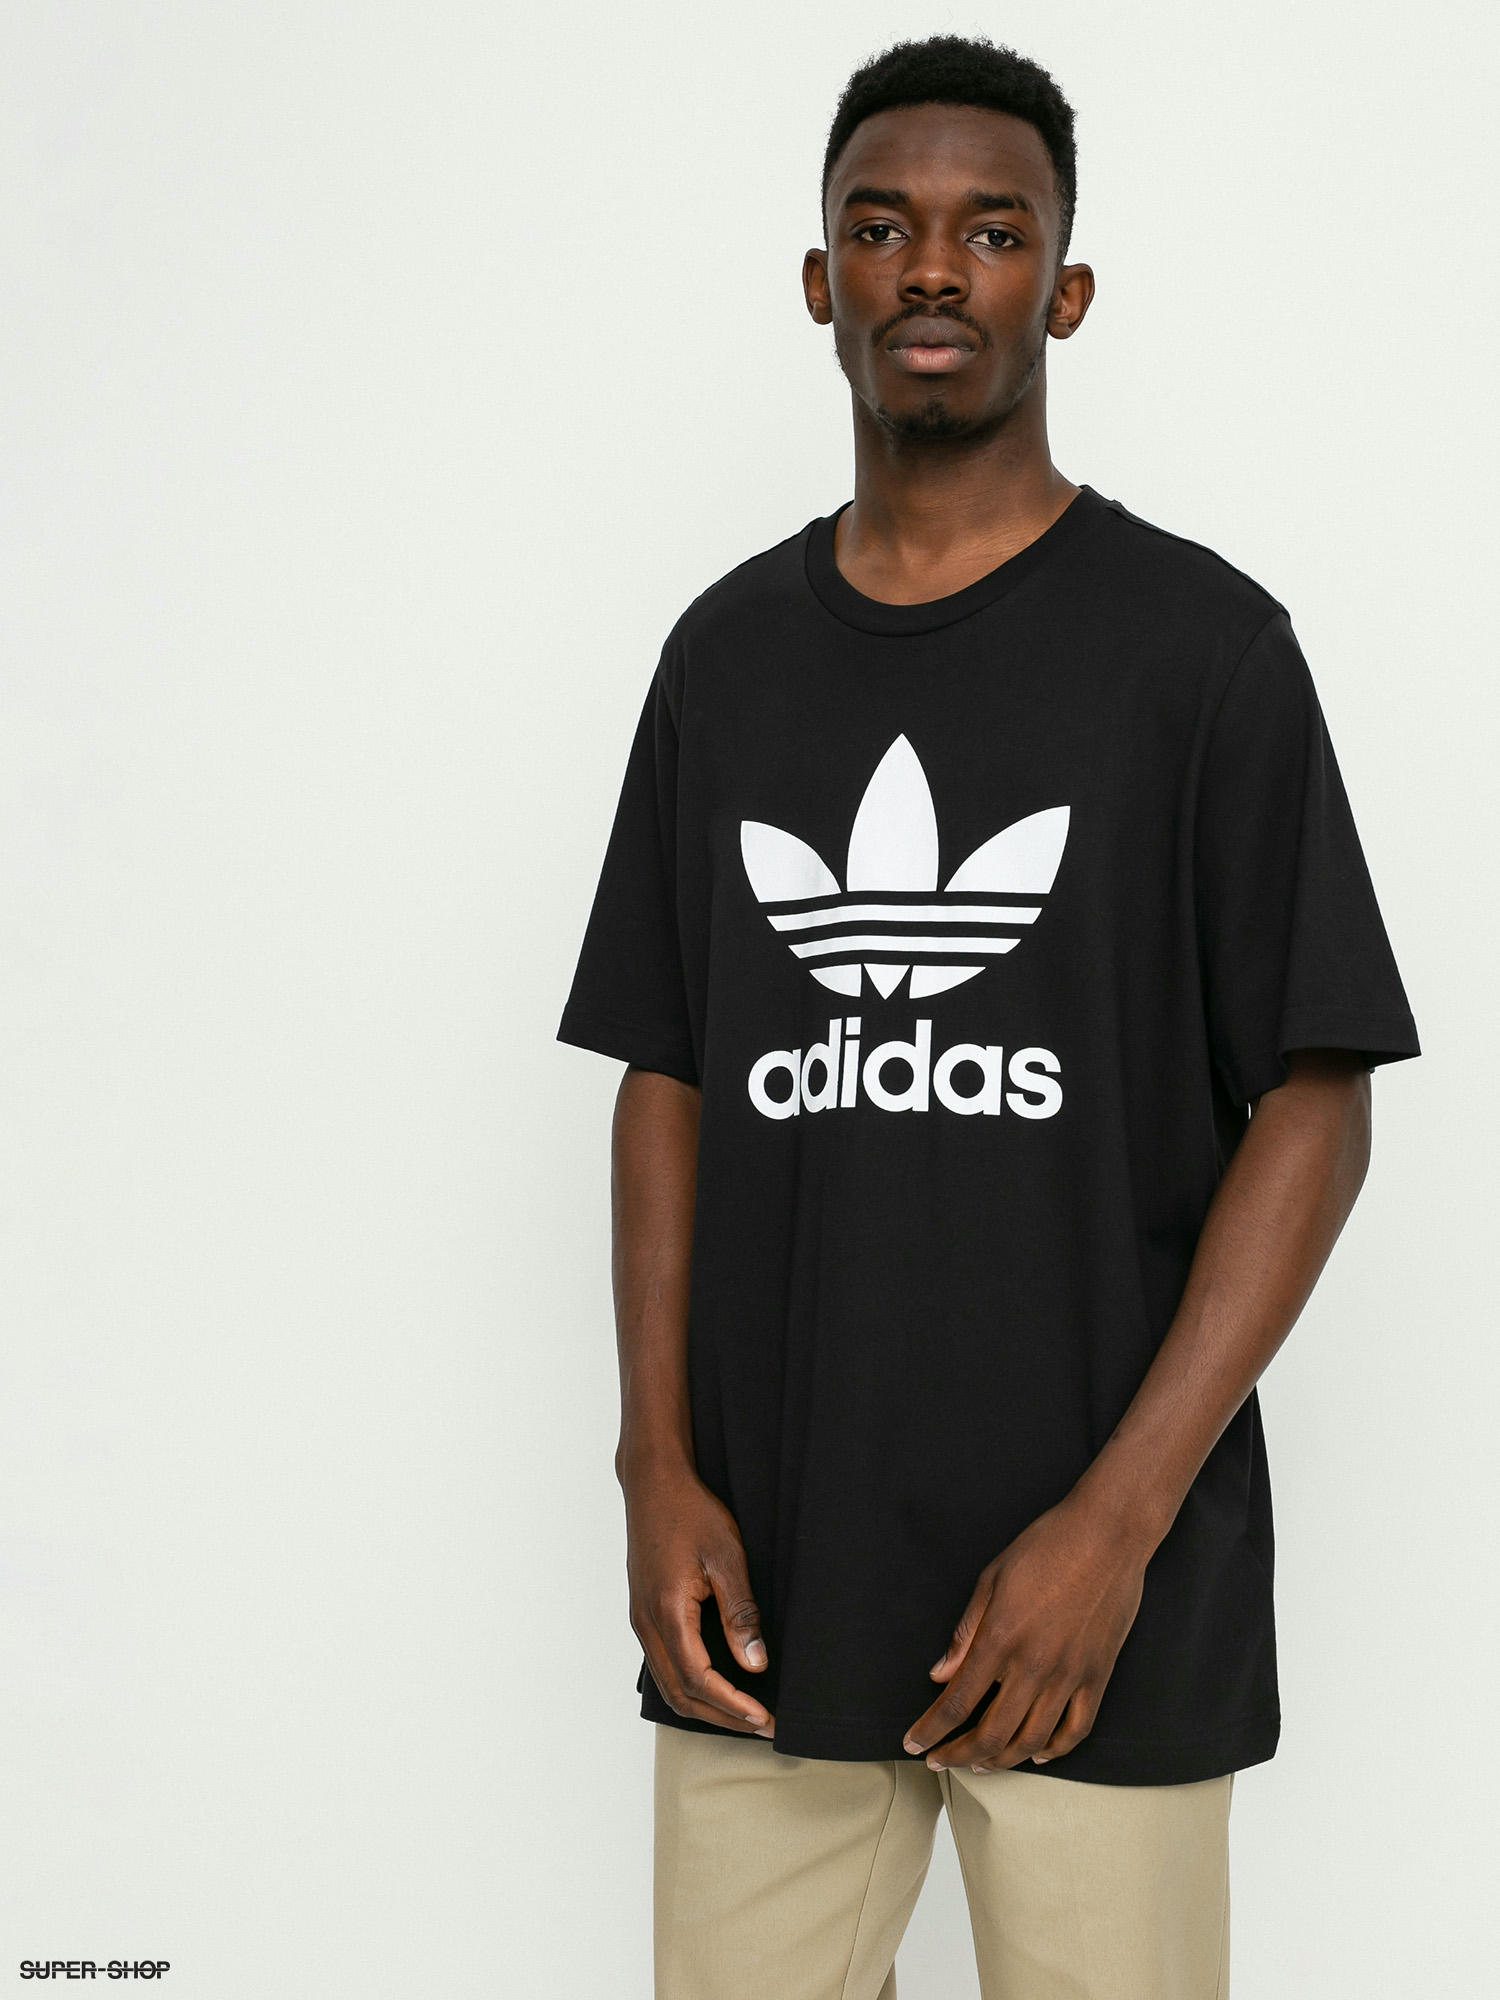 groef keuken woonadres adidas Originals Trefoil T-shirt (black/white)